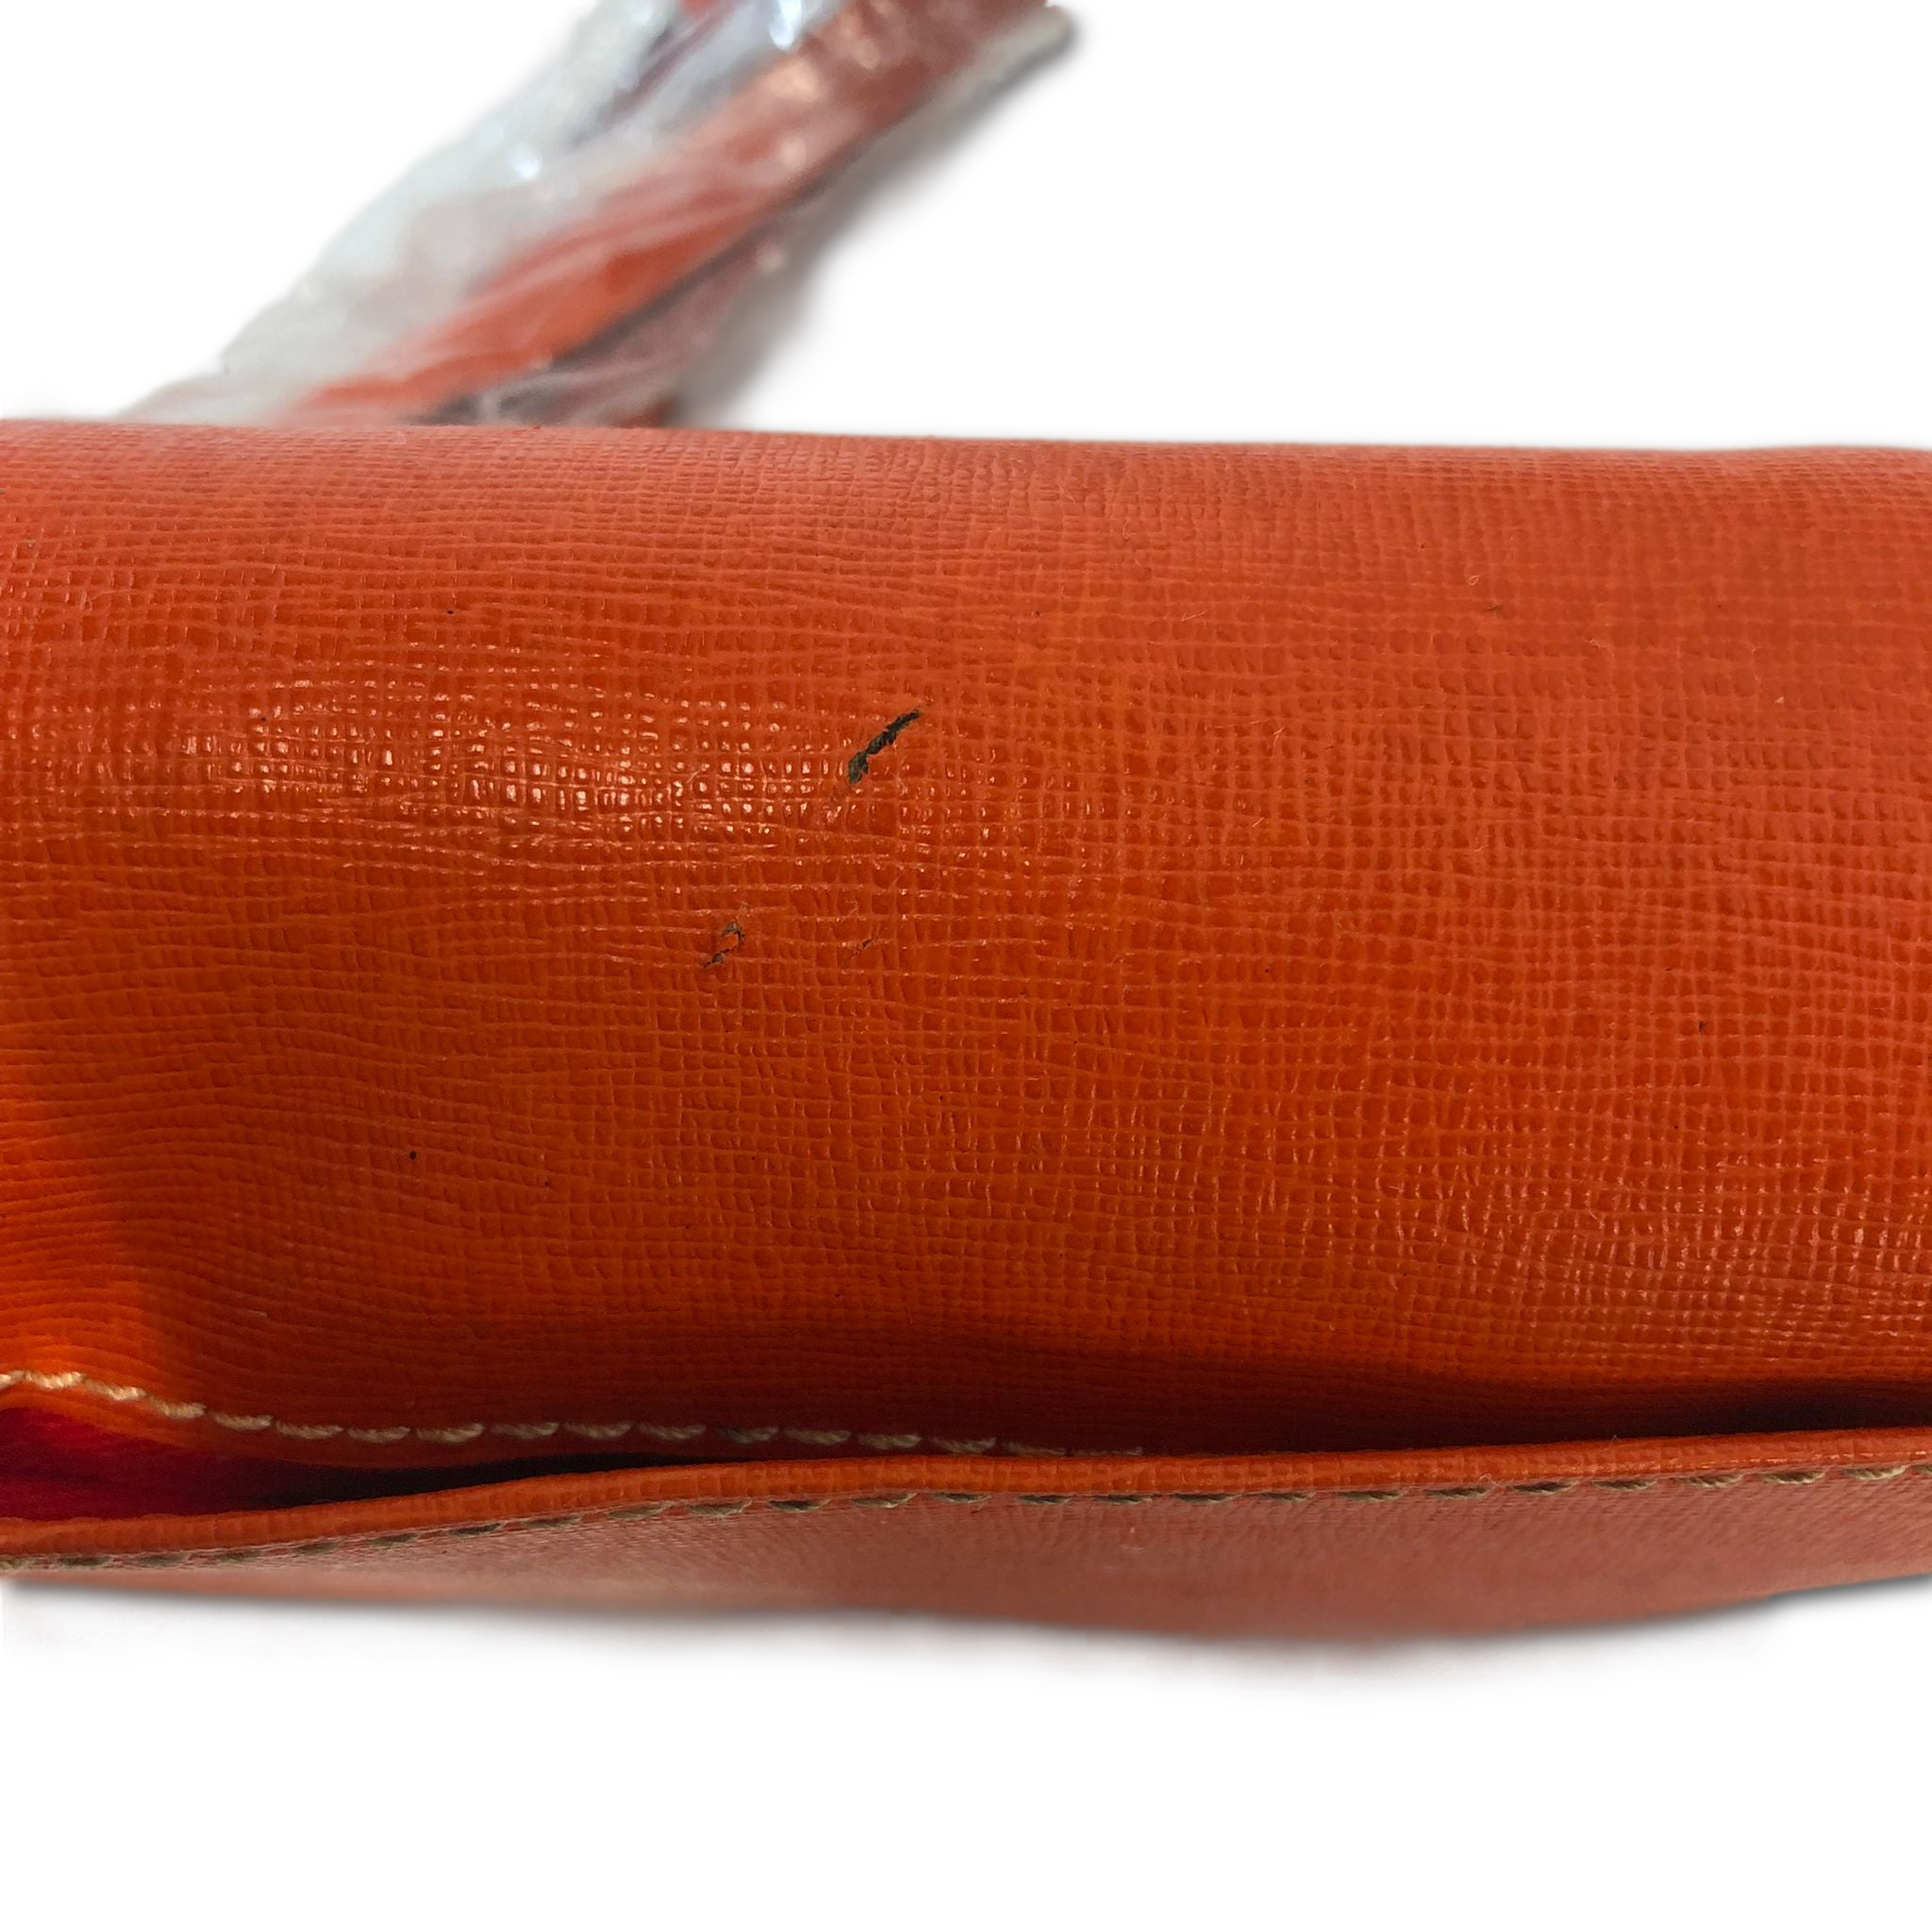 Dooney & Bourke Saffiano Leather Crossbody Bag with Tassel, Orange